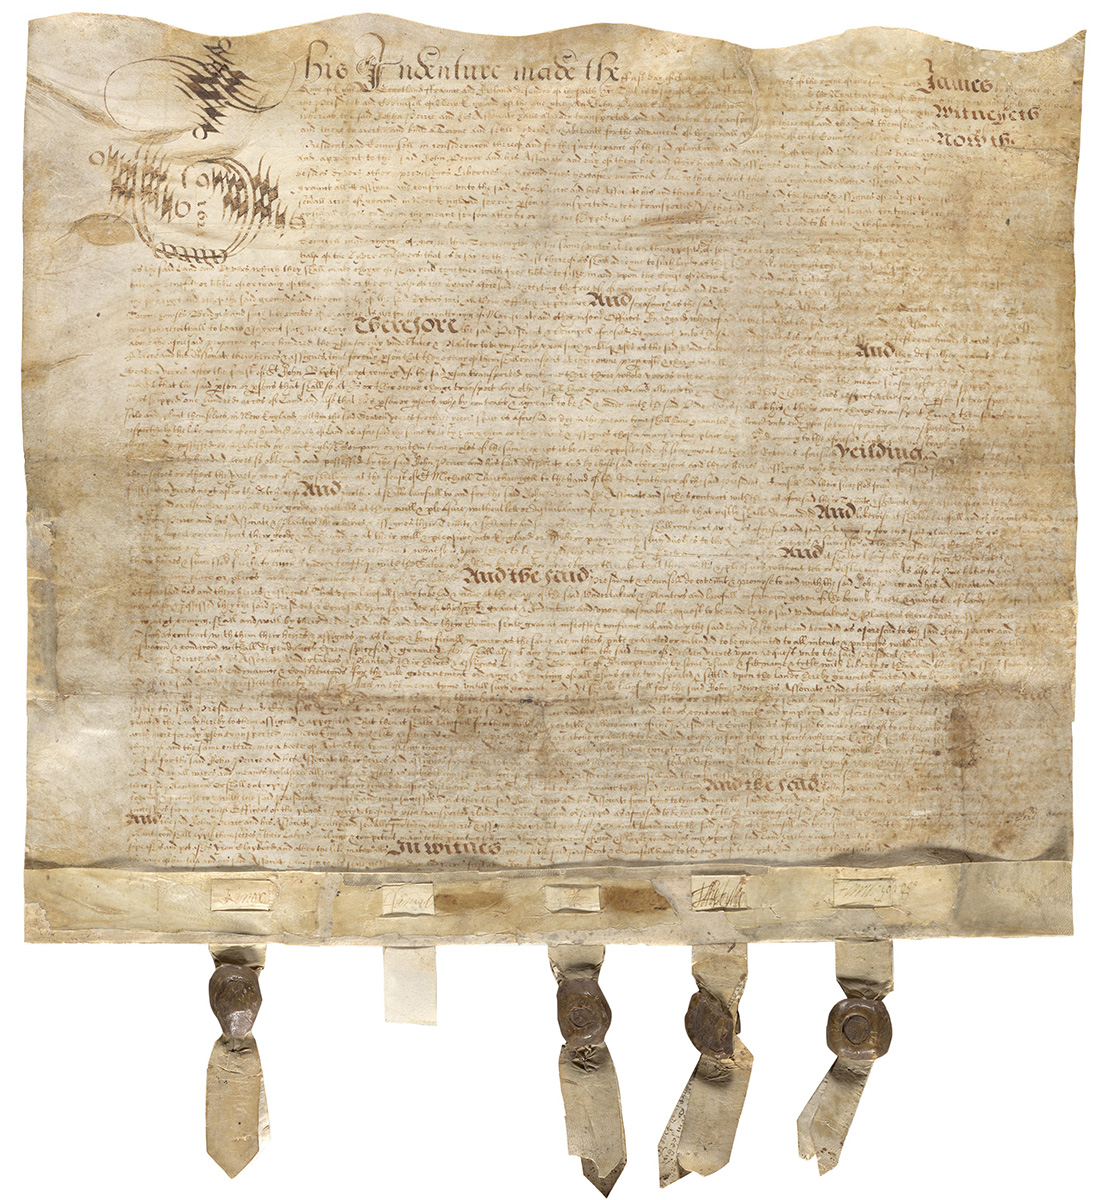 Second Peirce Patent, Mayflower